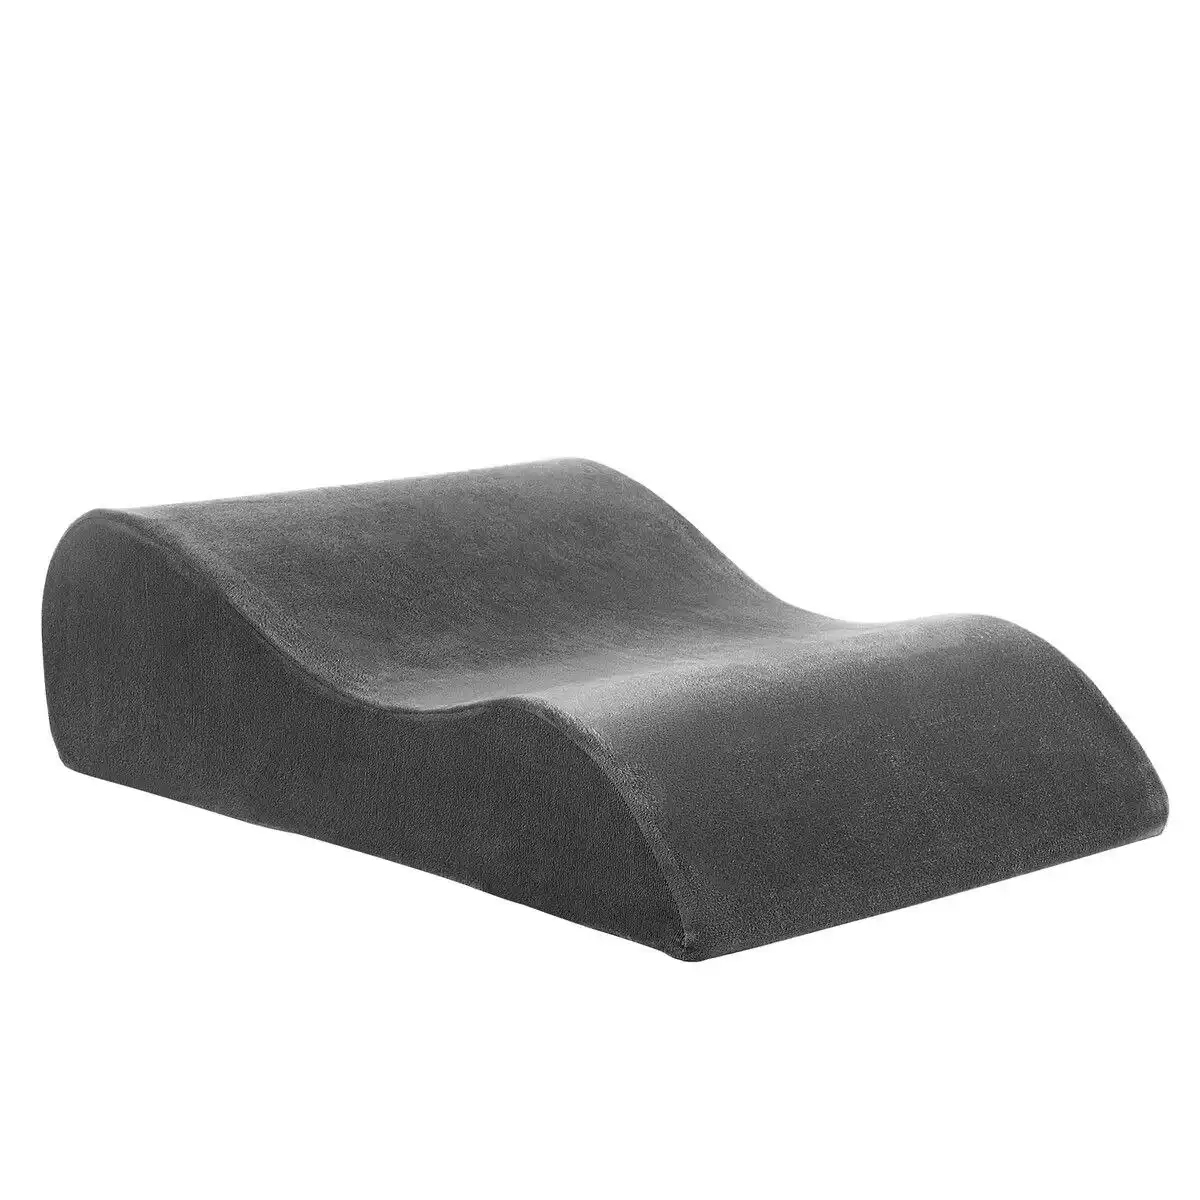 Luxdream Bed Wedge Leg Pillow Backrest Contour Ergonomic Pregnancy Foam Cushion Elevation Support Raiser with Cover